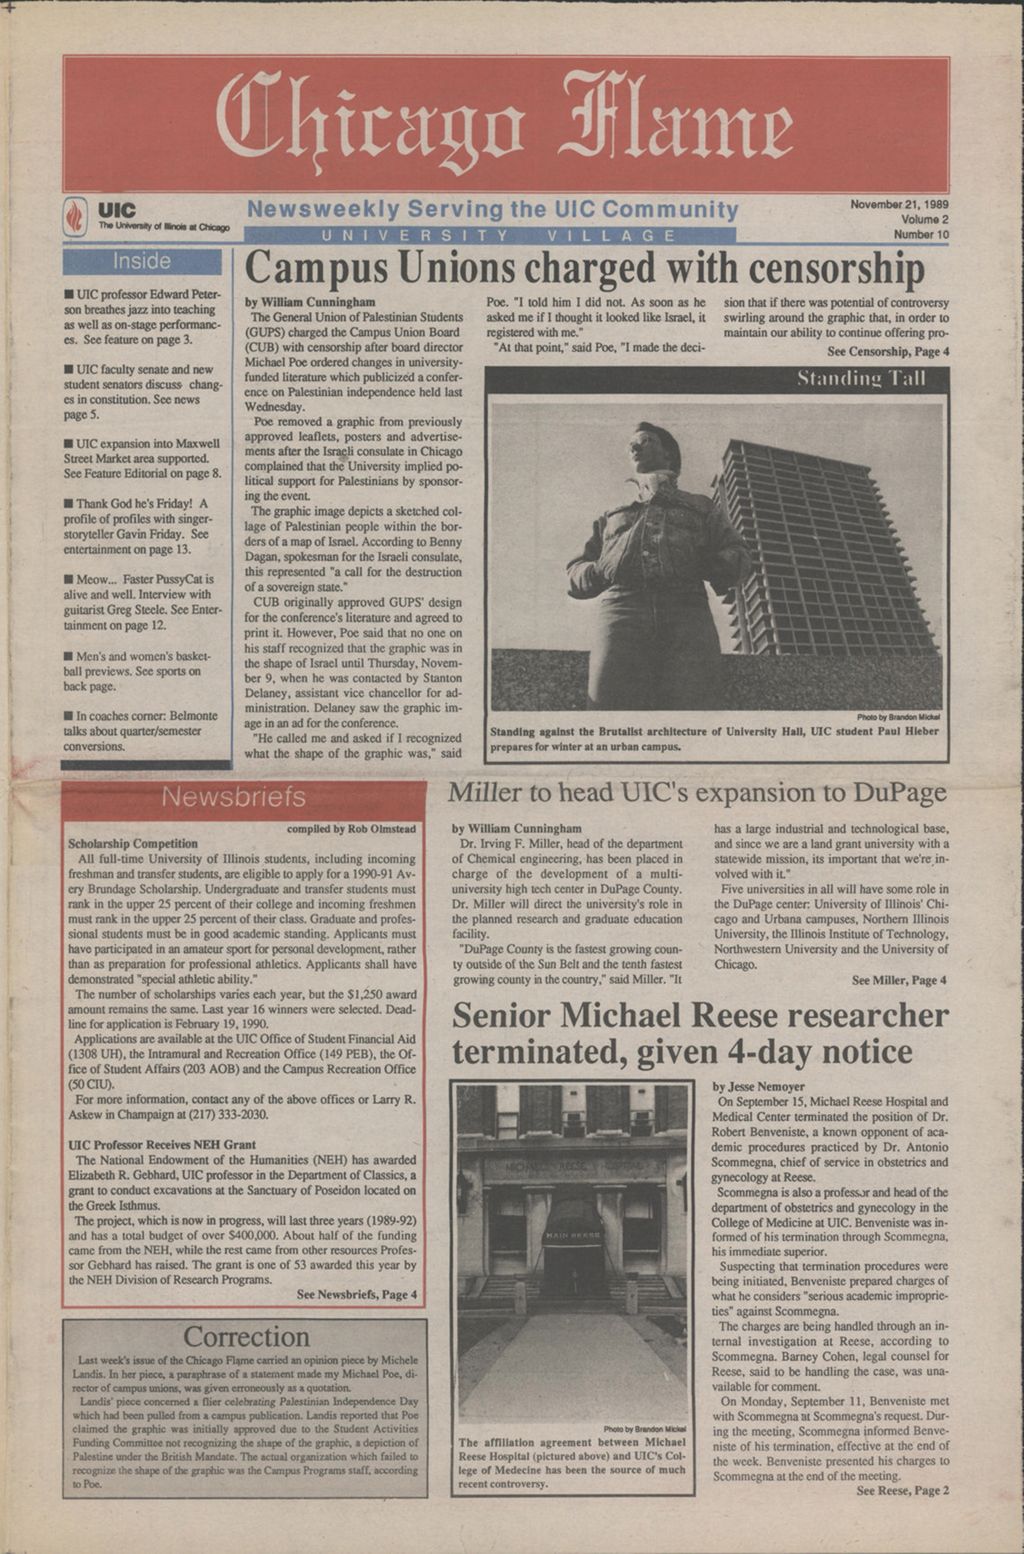 Chicago Flame (November 21, 1989)